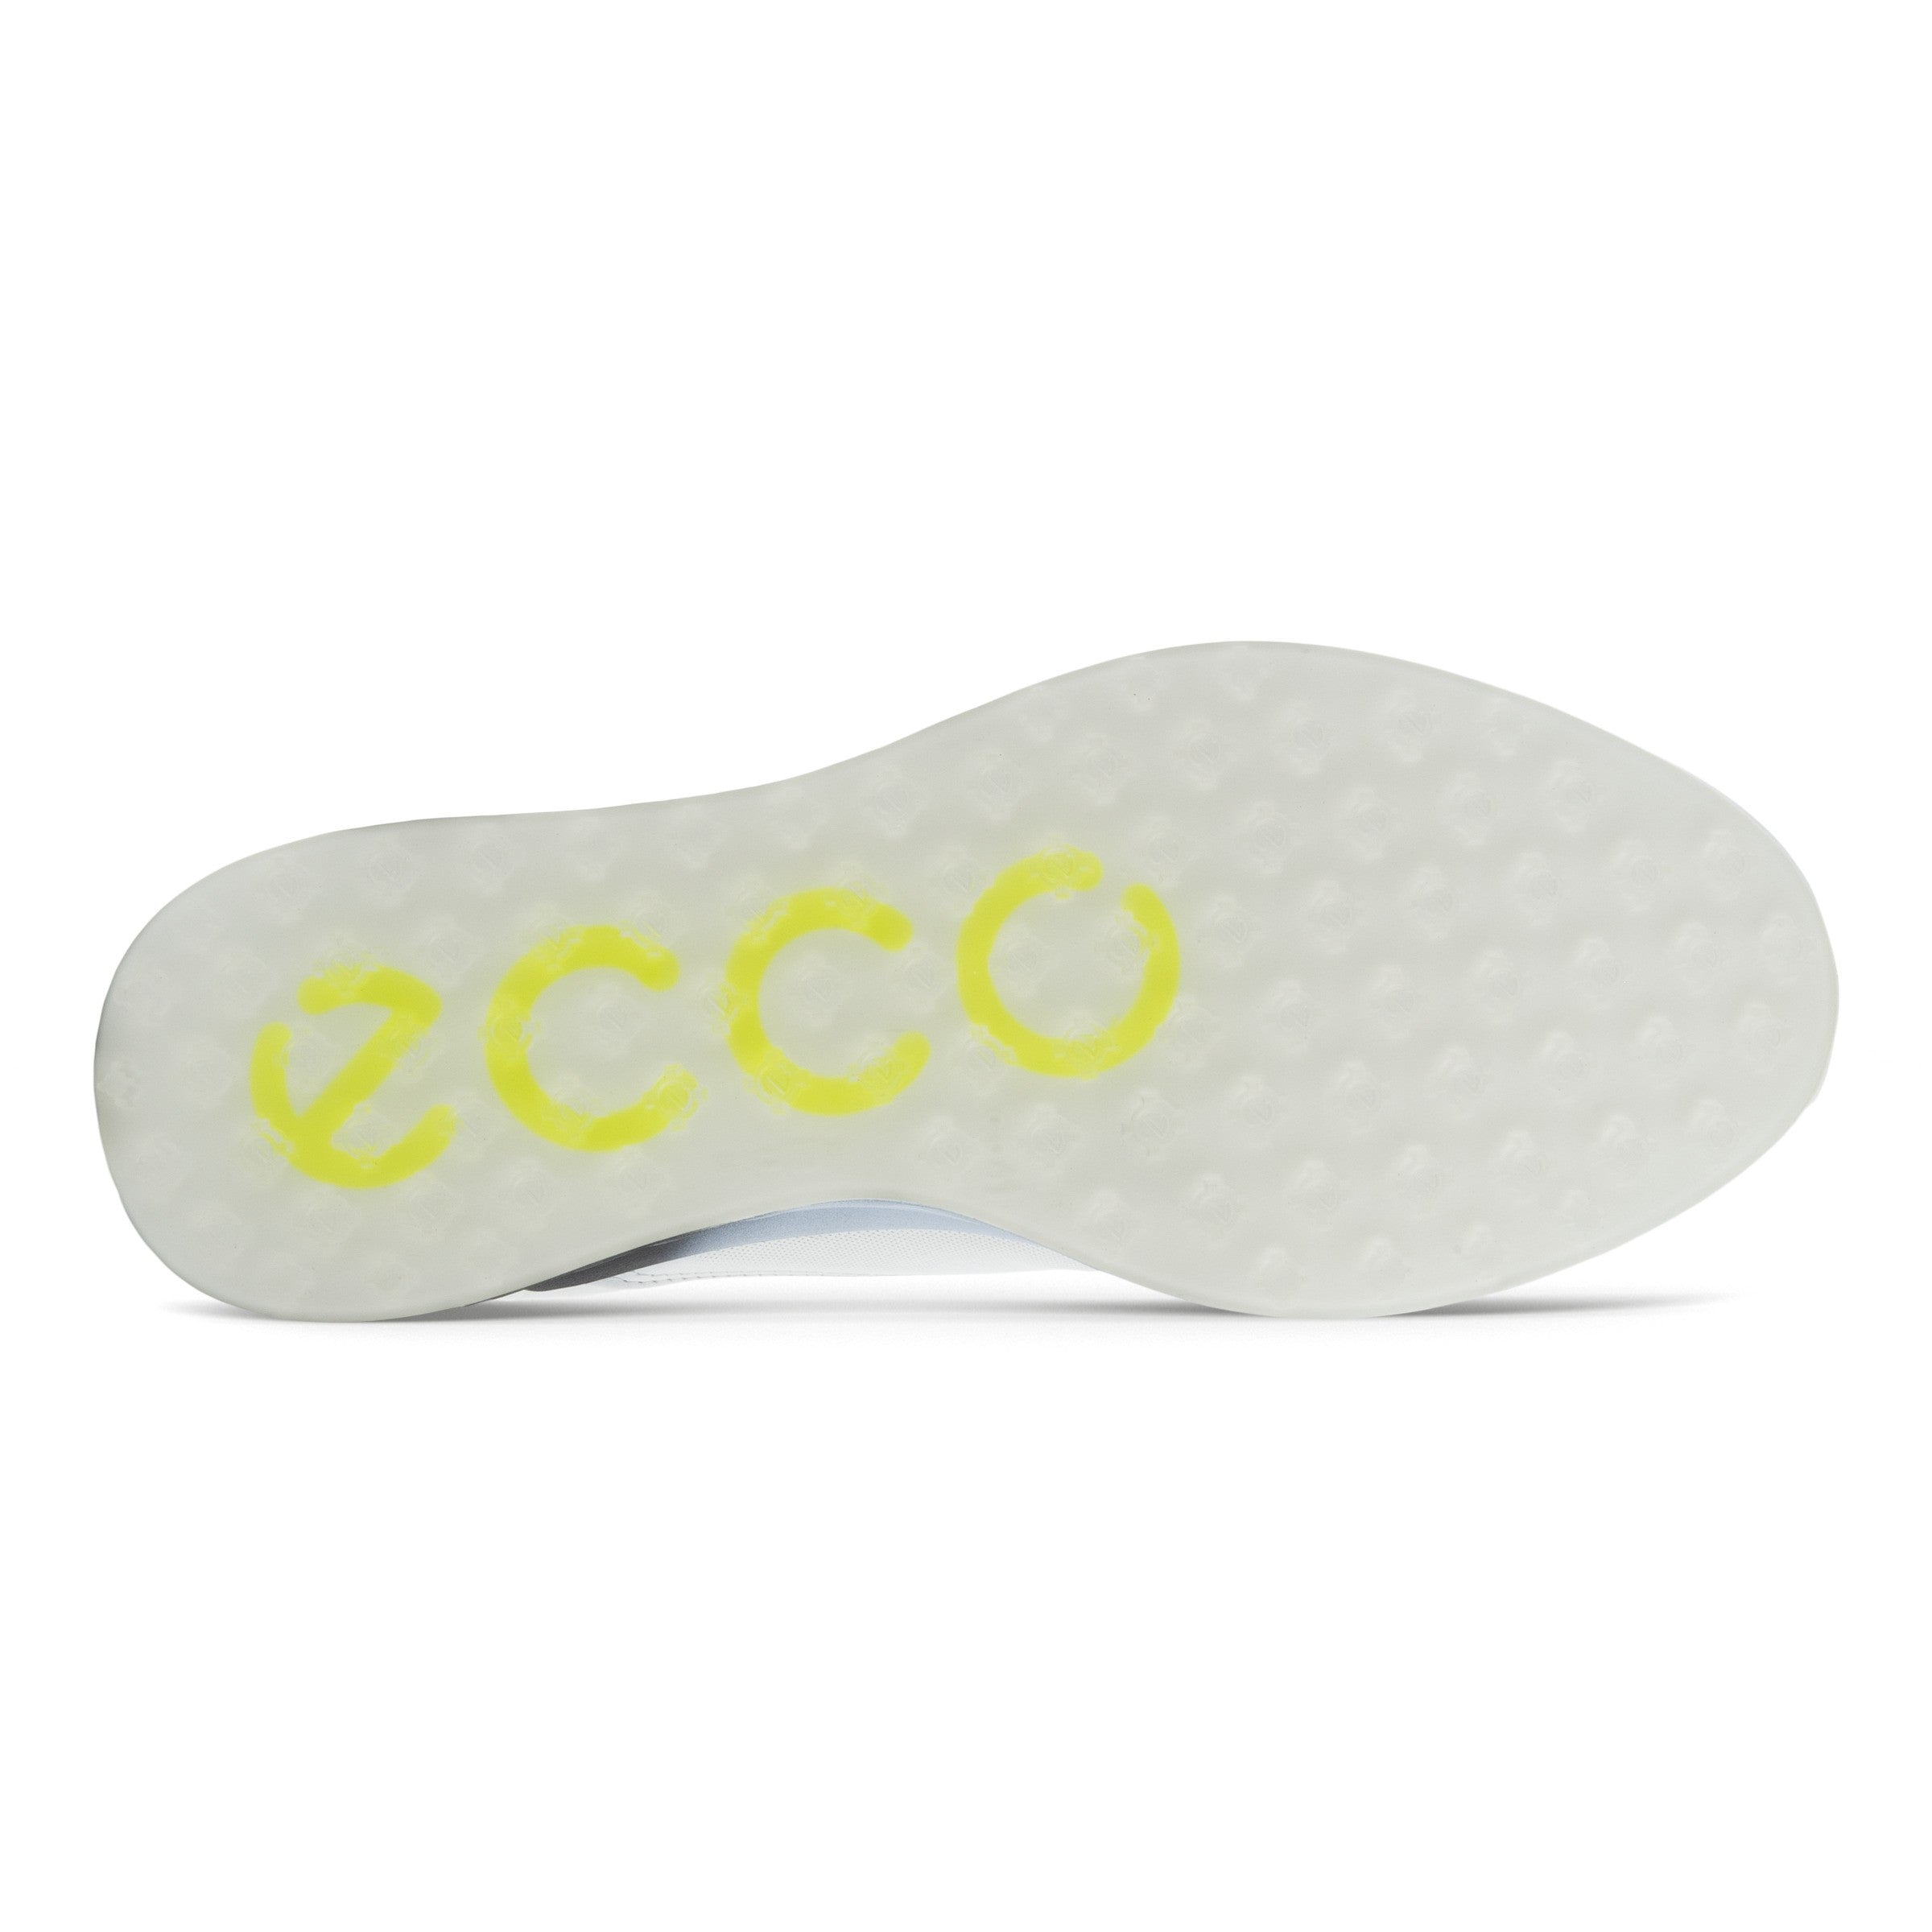 Ecco S-Three Gore-Tex Golf Shoes